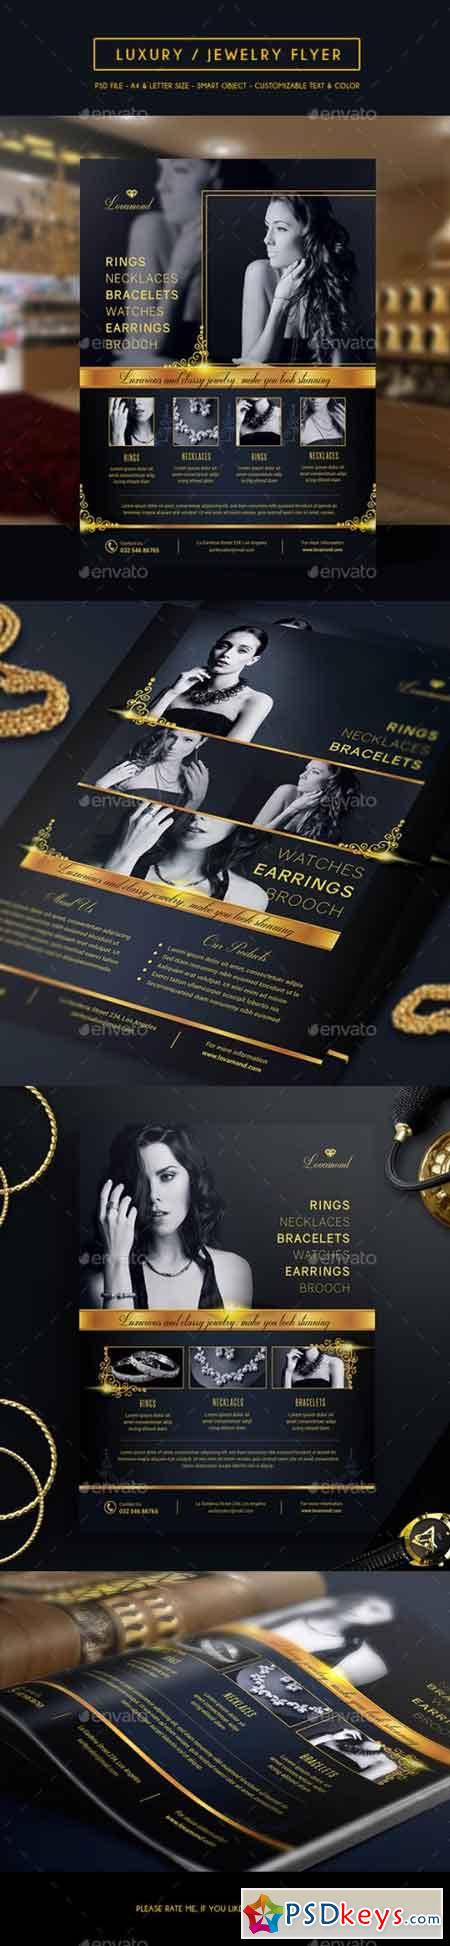 Luxury Jewelry Store Flyer 13928559